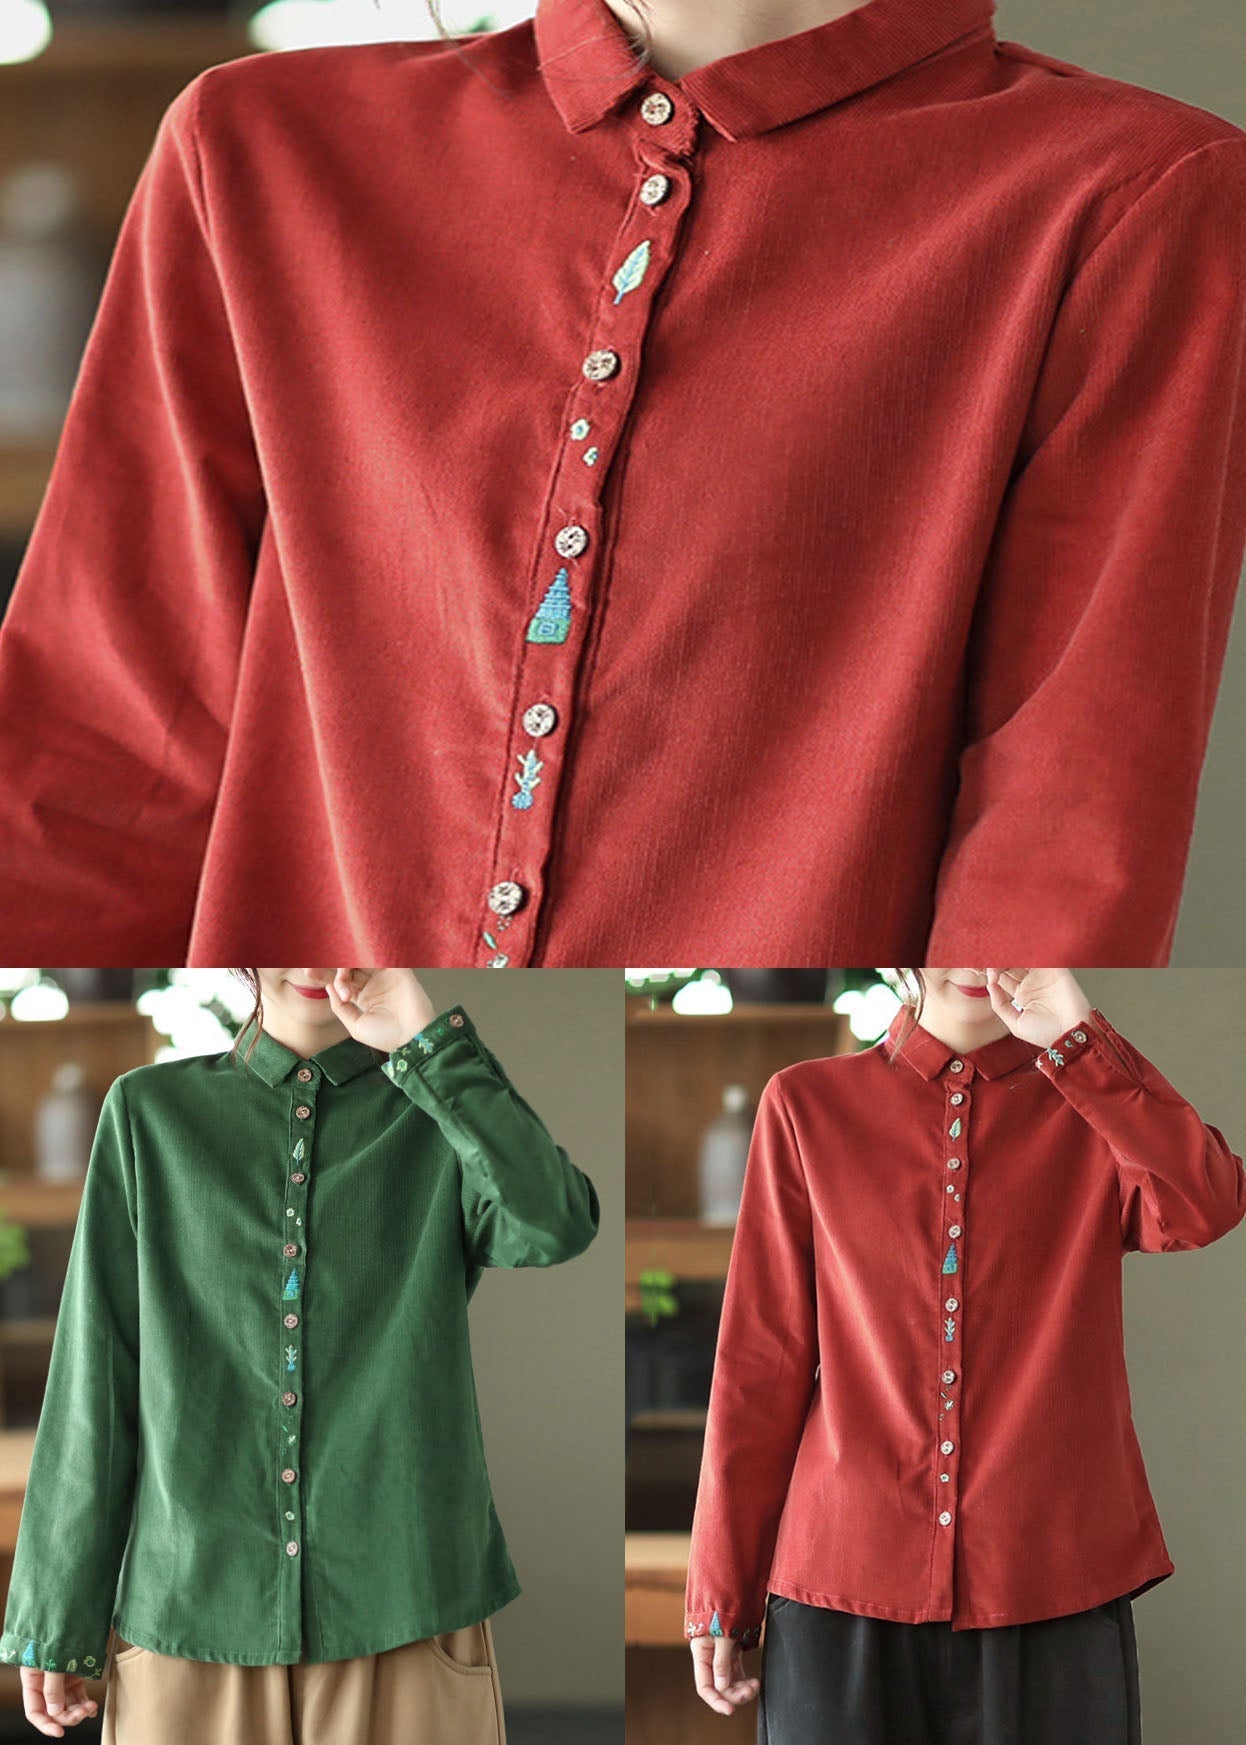 Green Patchwork Corduroy Tops Peter Pan Collar Button Spring LY6187 - fabuloryshop